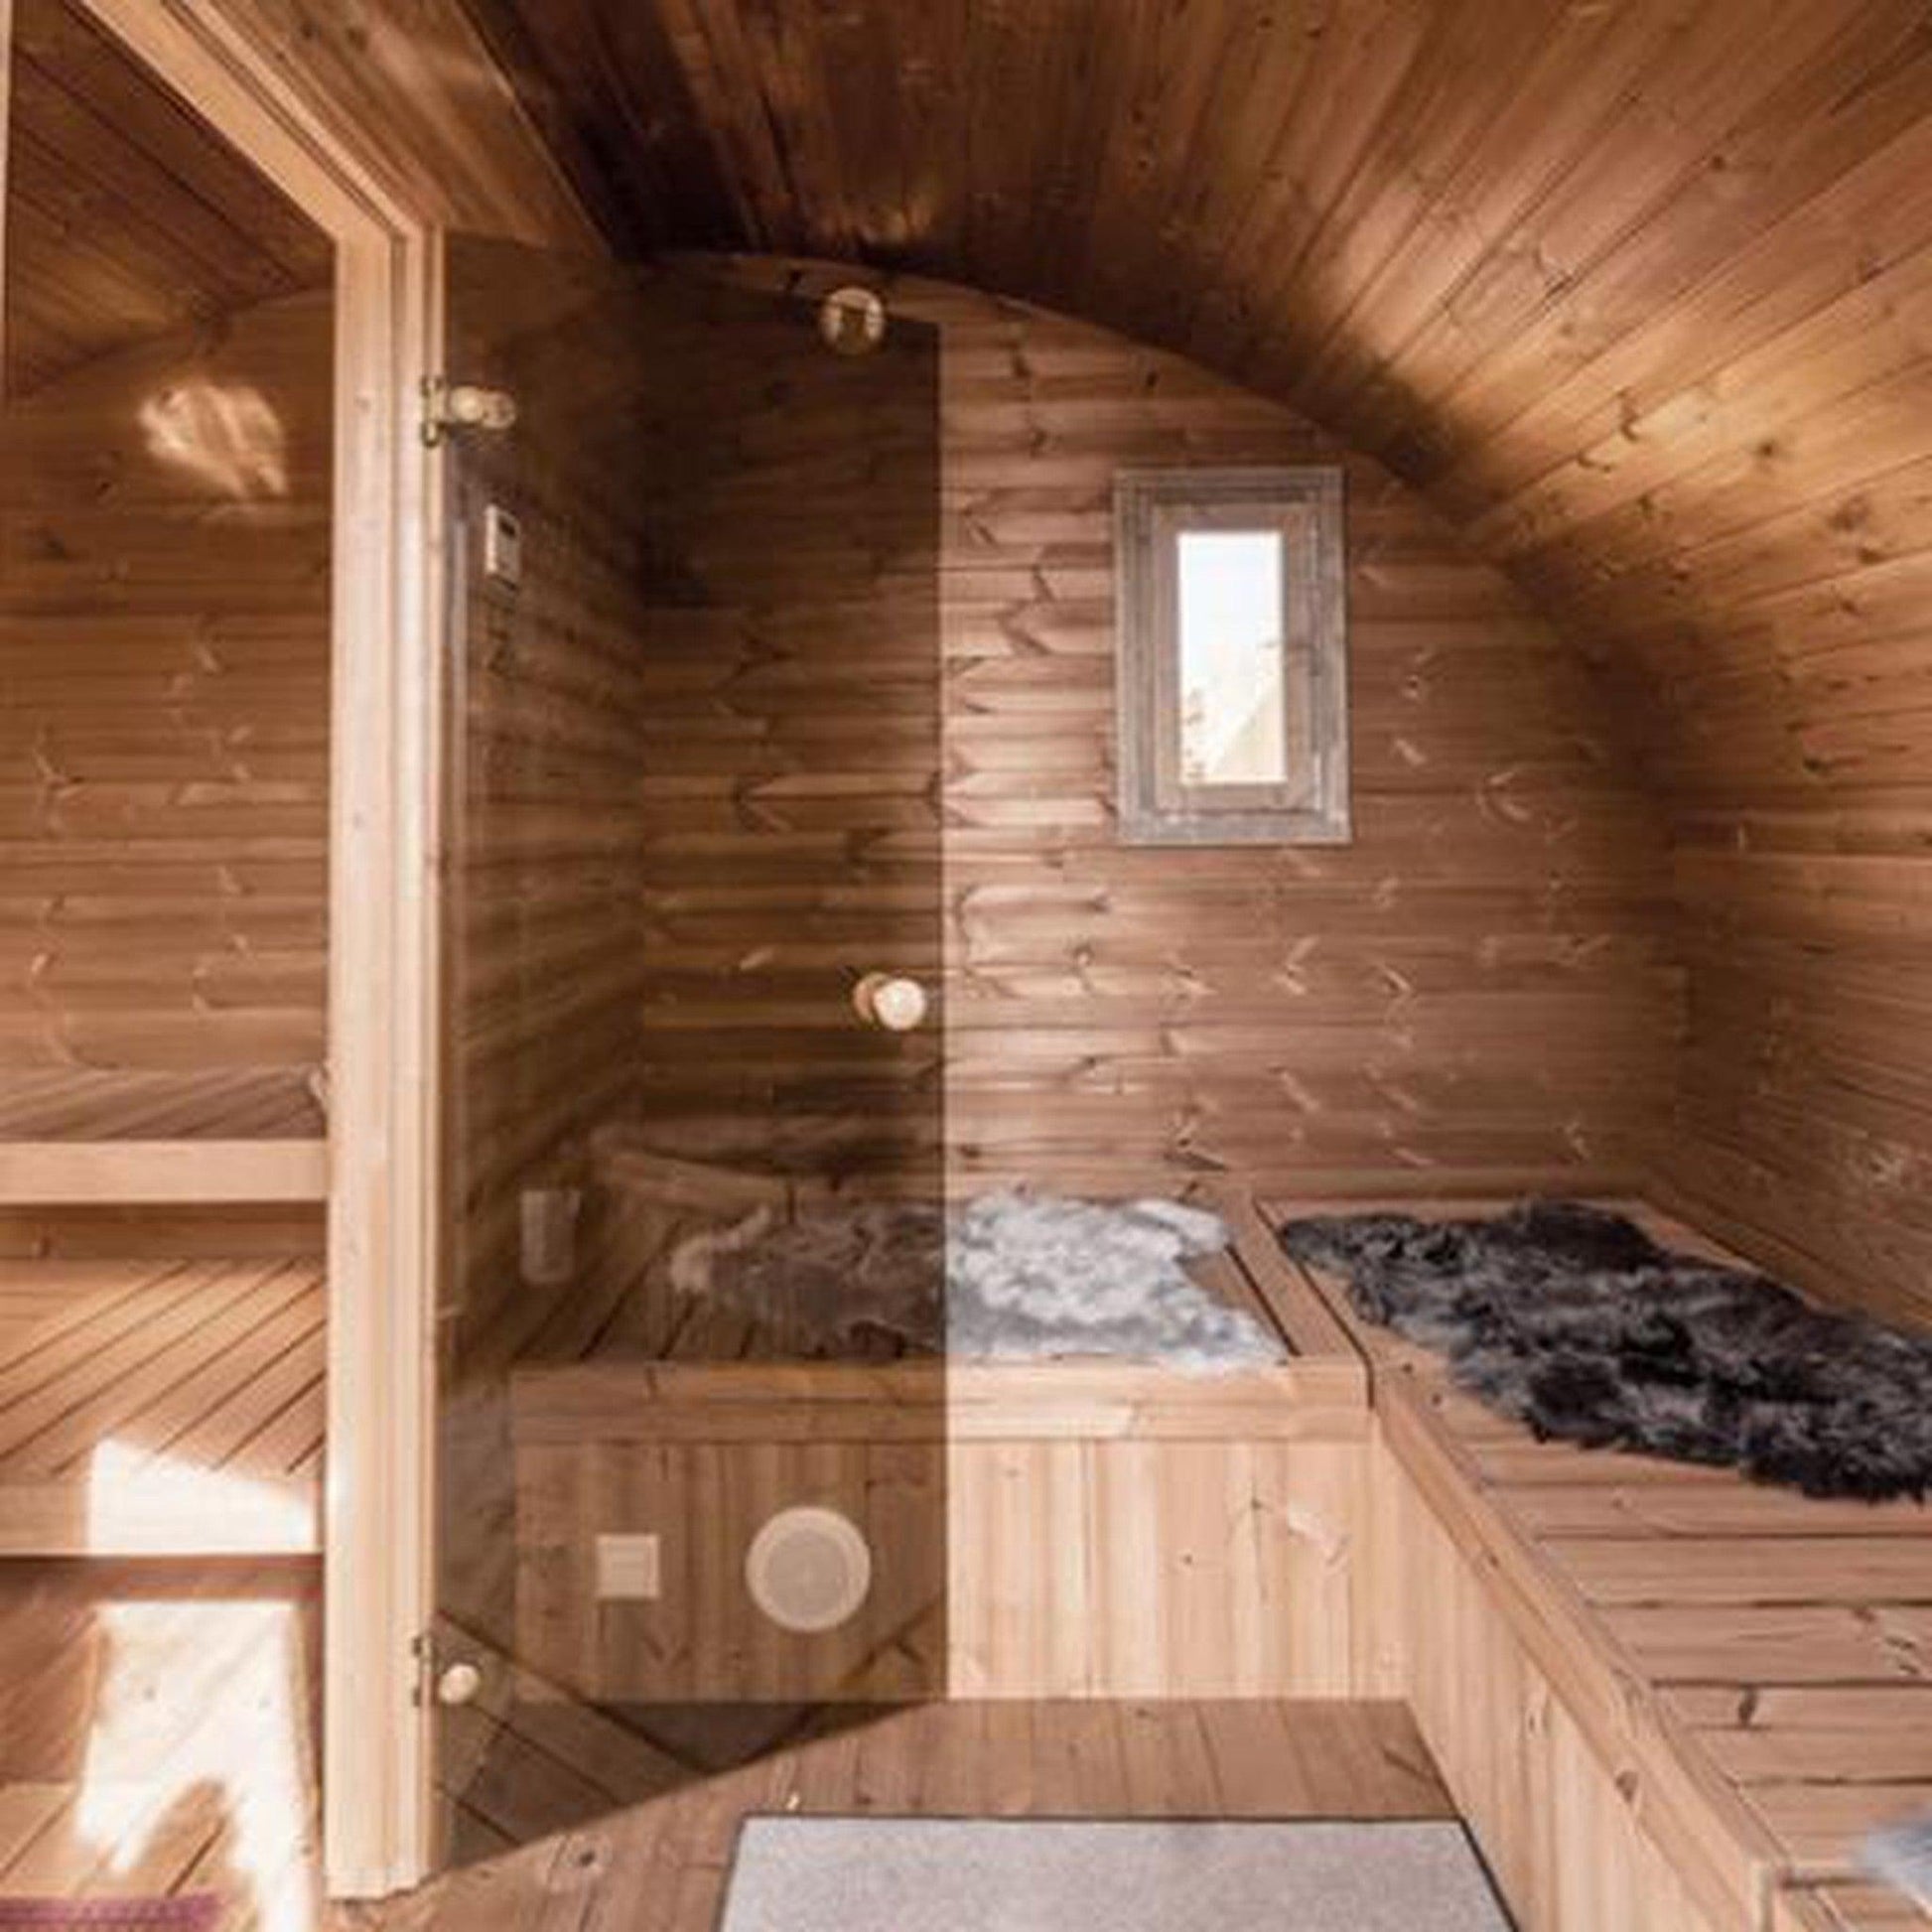 SaunaLife Garden Series Model G11 Outdoor Home Sauna Kit -2 Room Sauna (Up to 8 Persons)